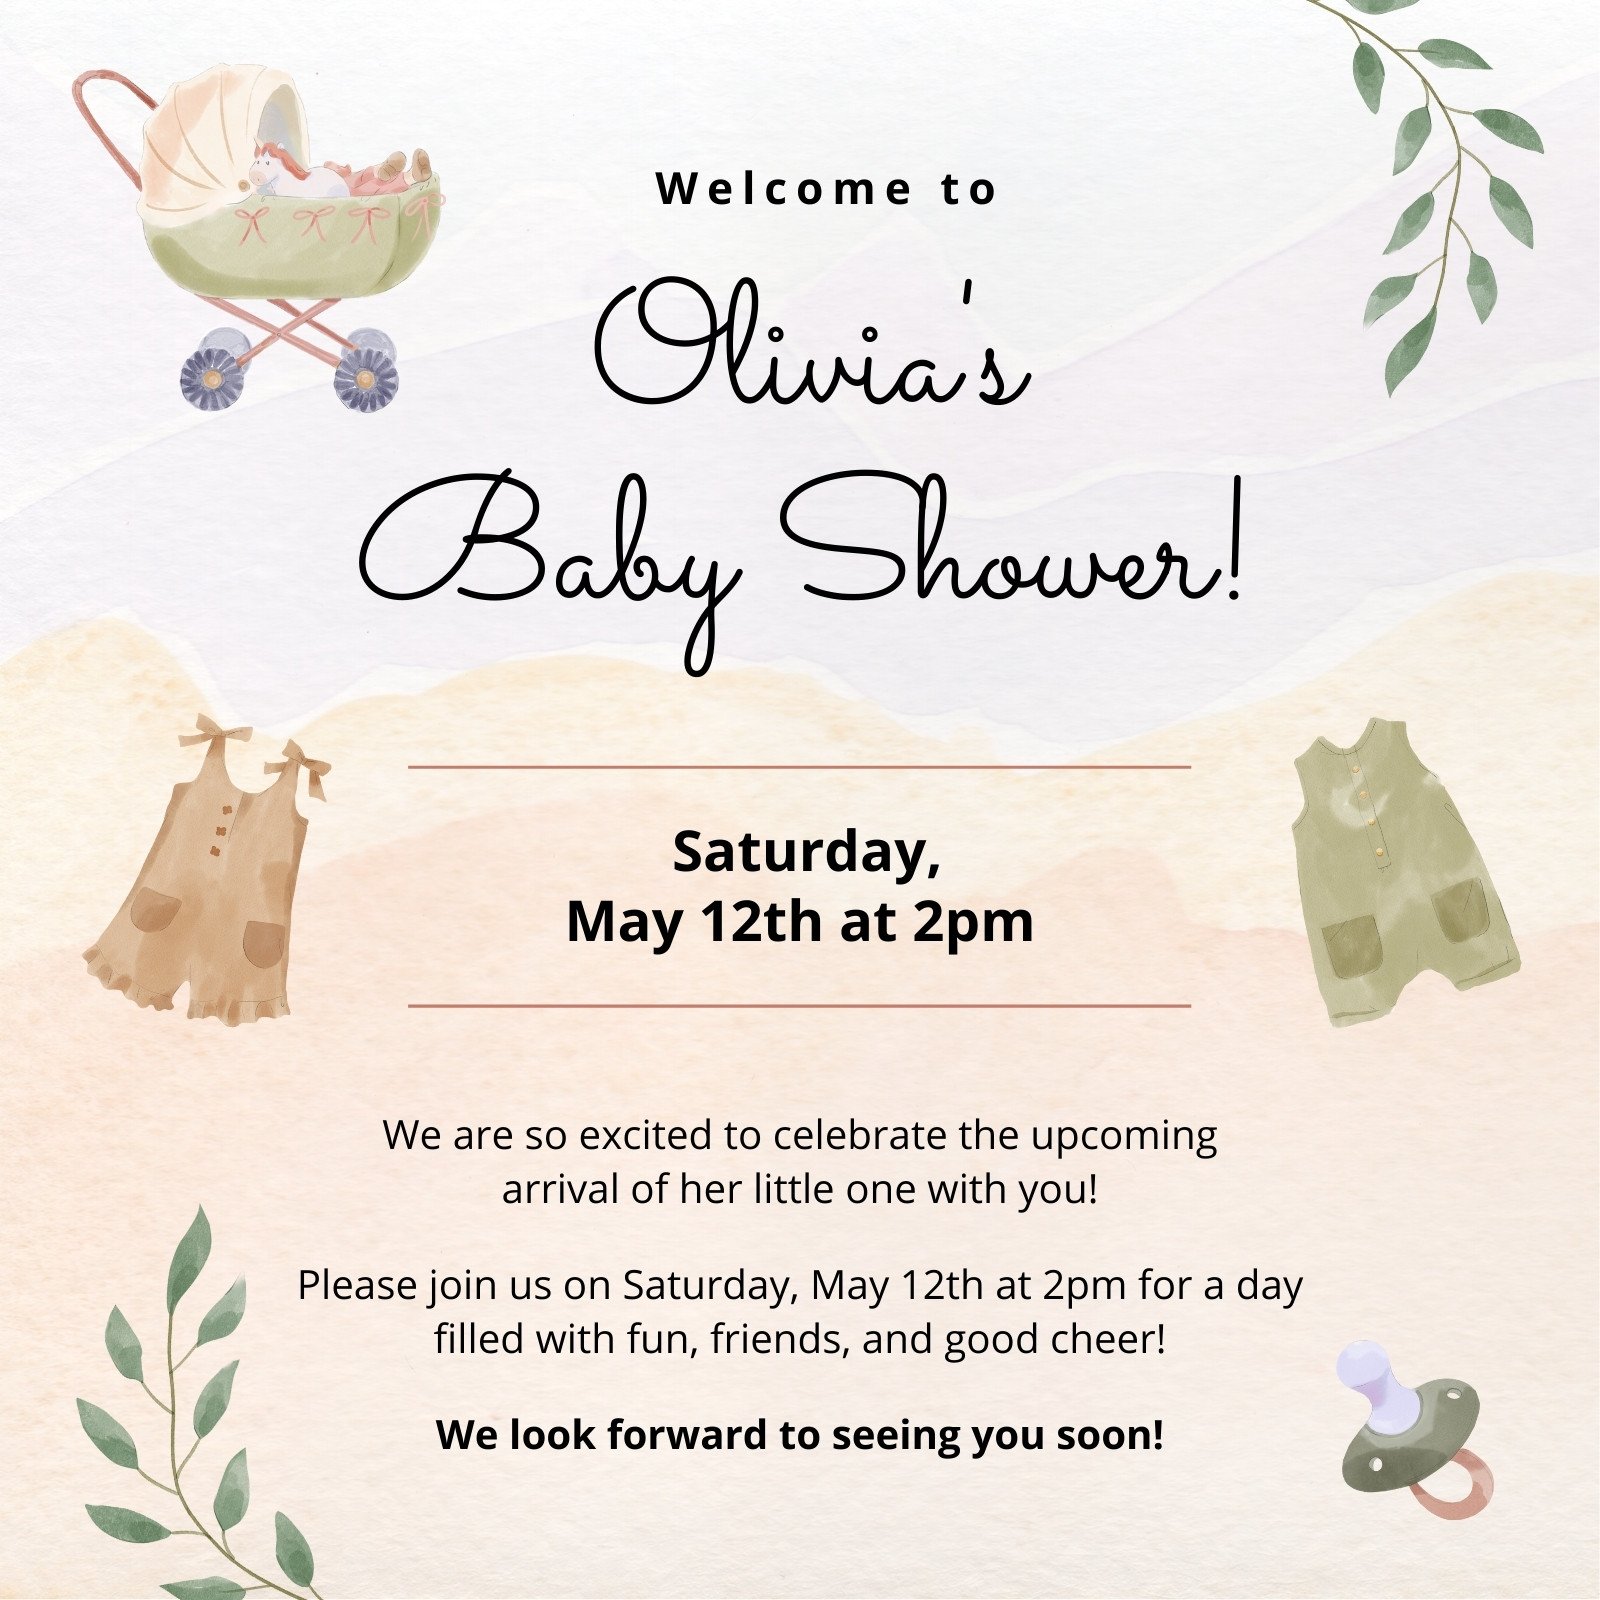 Free, custom printable baby shower invitation templates | Canva